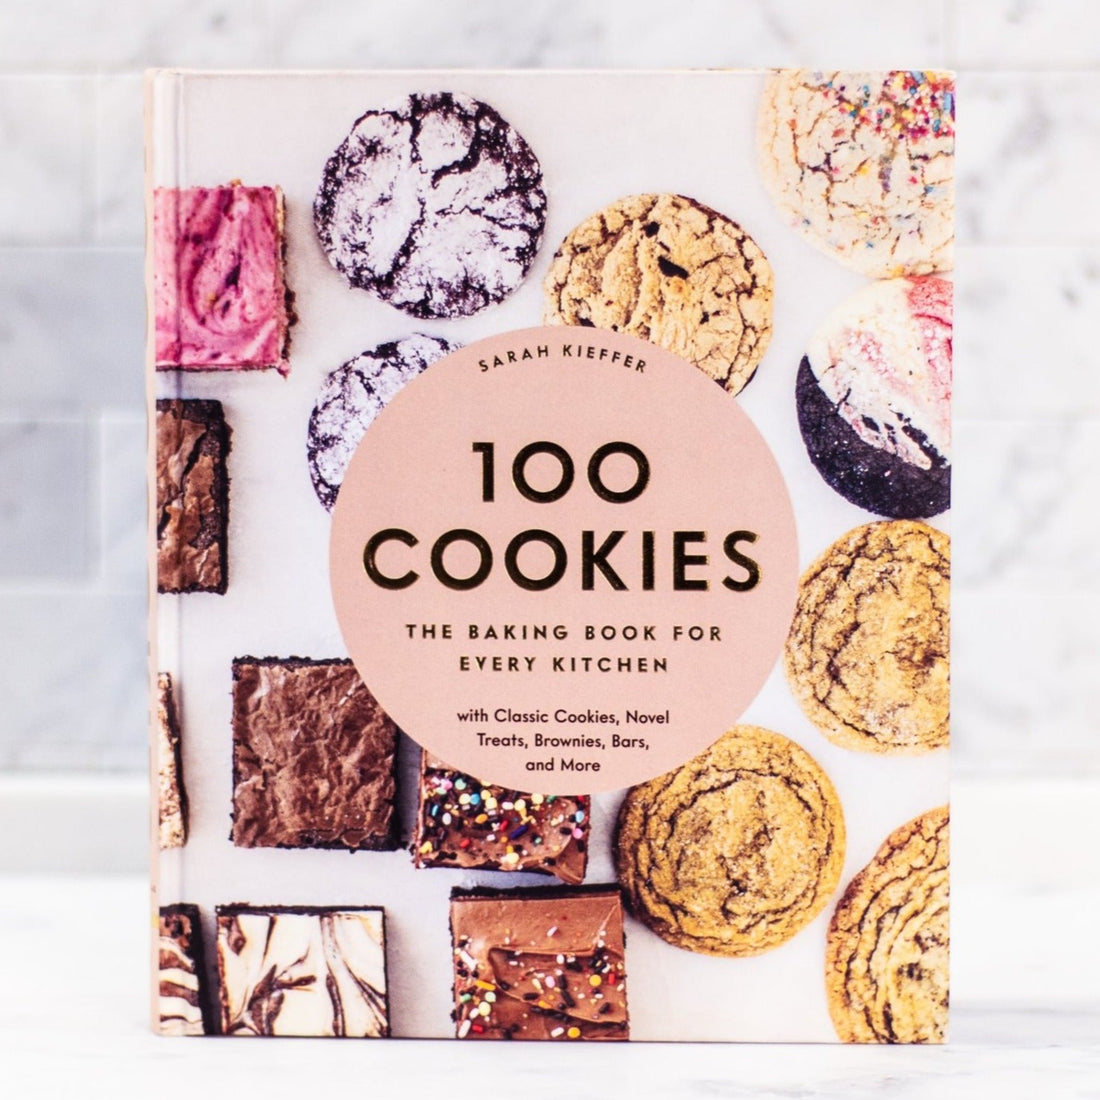 100 Cookies by Sarah Kieffer